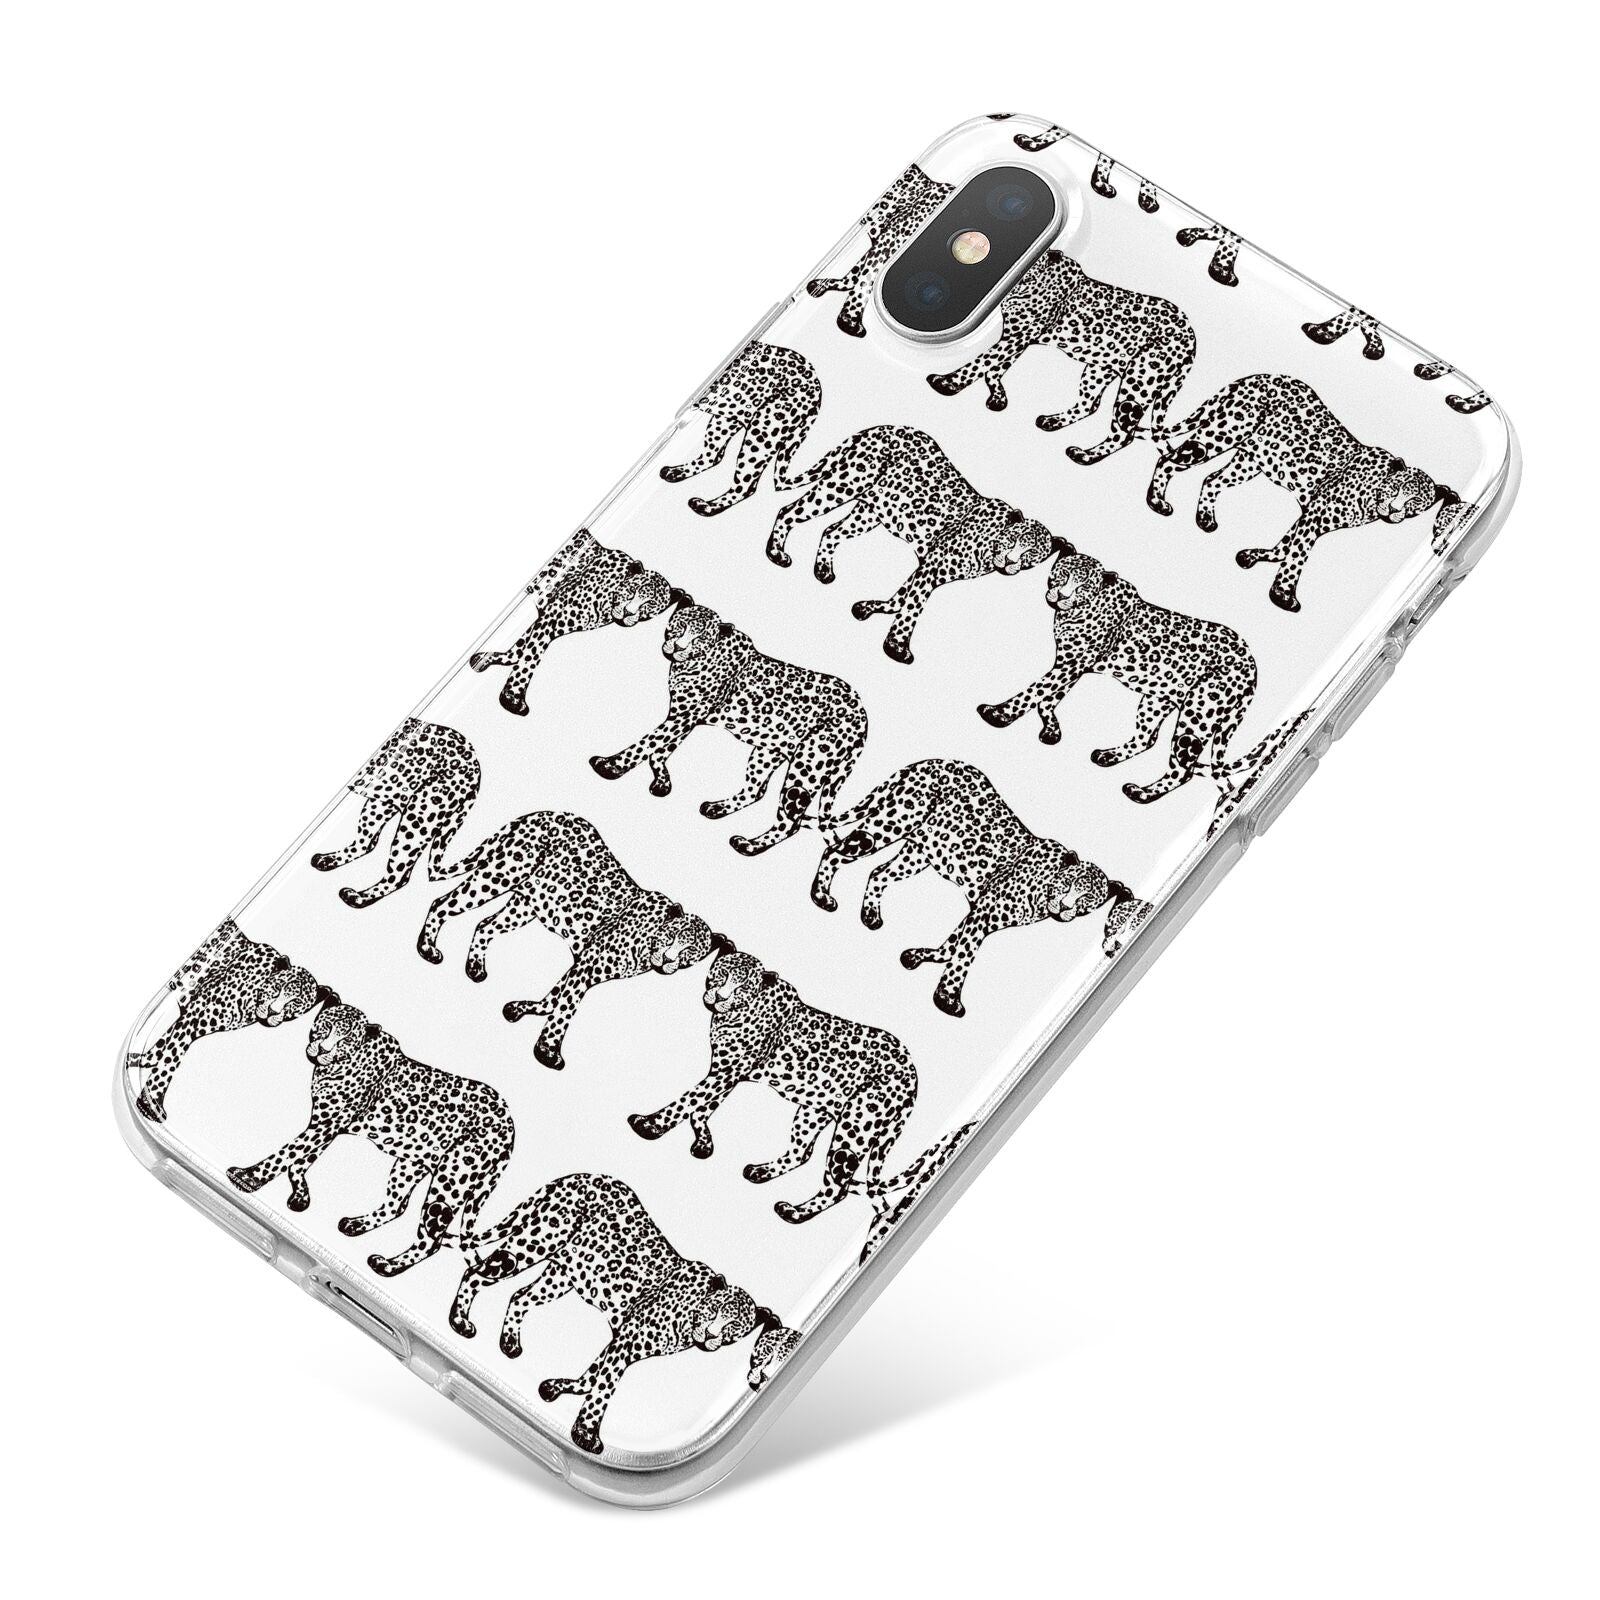 Monochrome Mirrored Leopard Print iPhone X Bumper Case on Silver iPhone